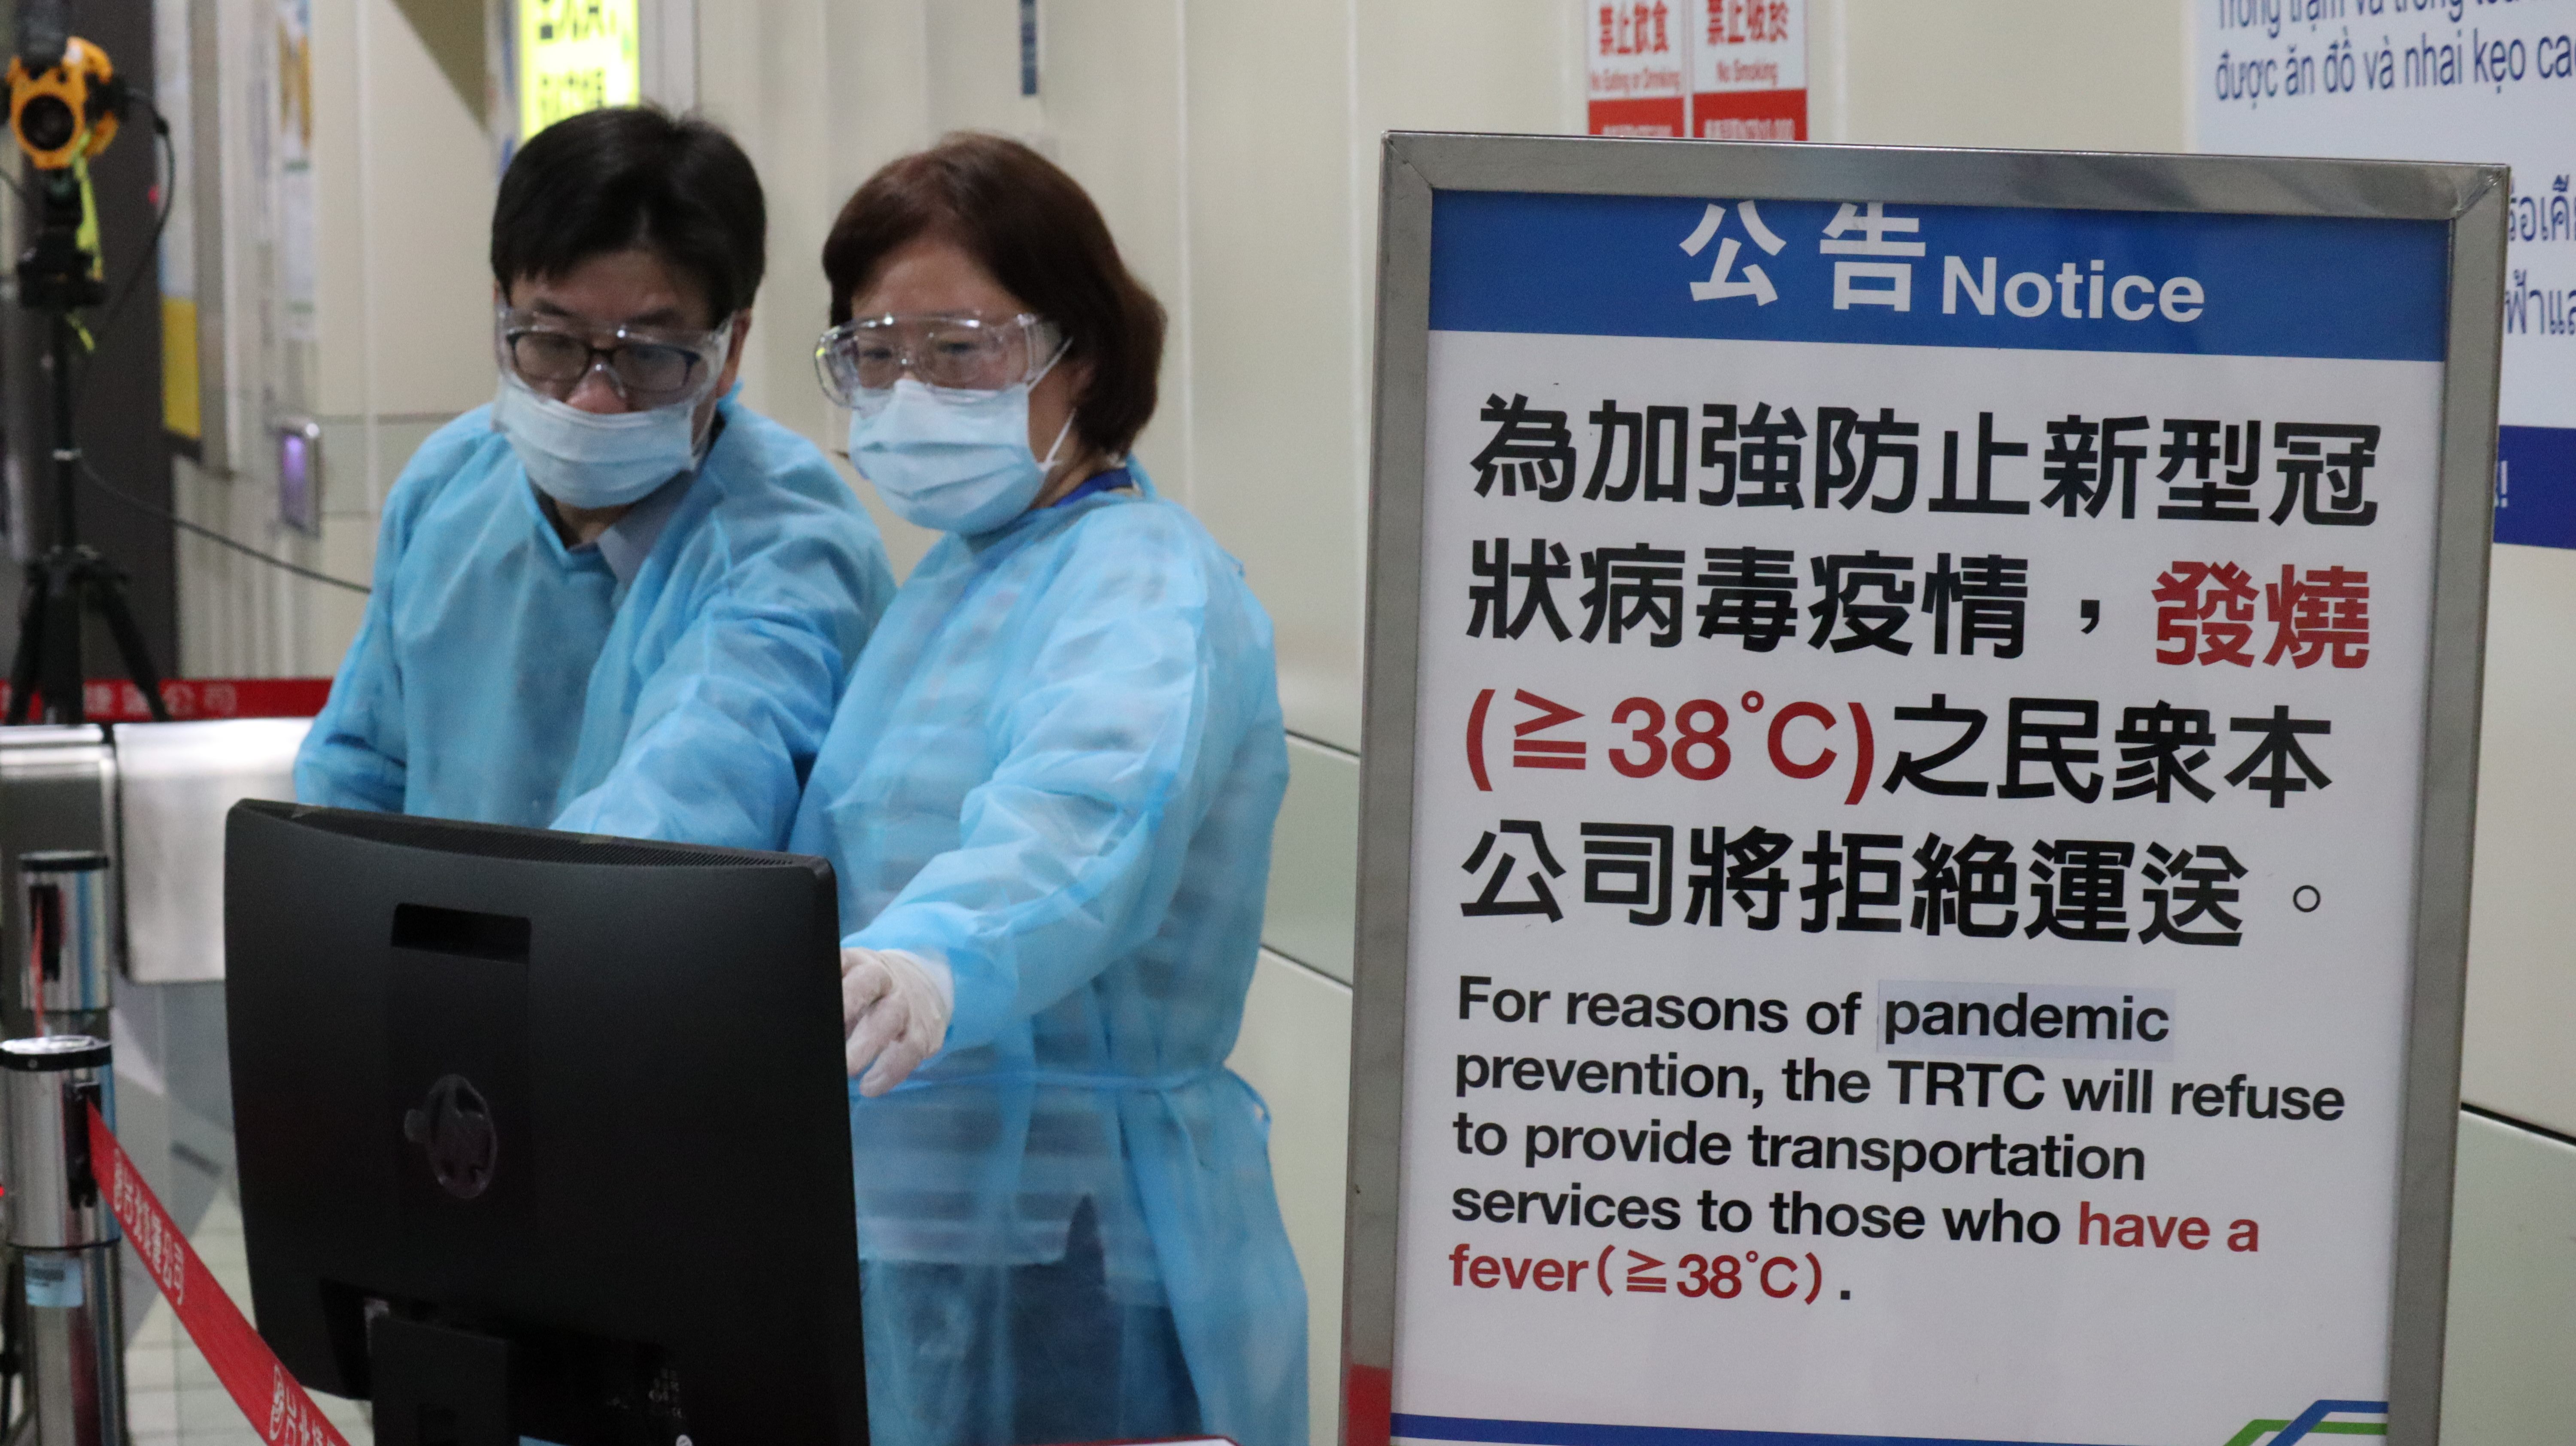 MRT volunteers monitoring passenger temperatures at the gate